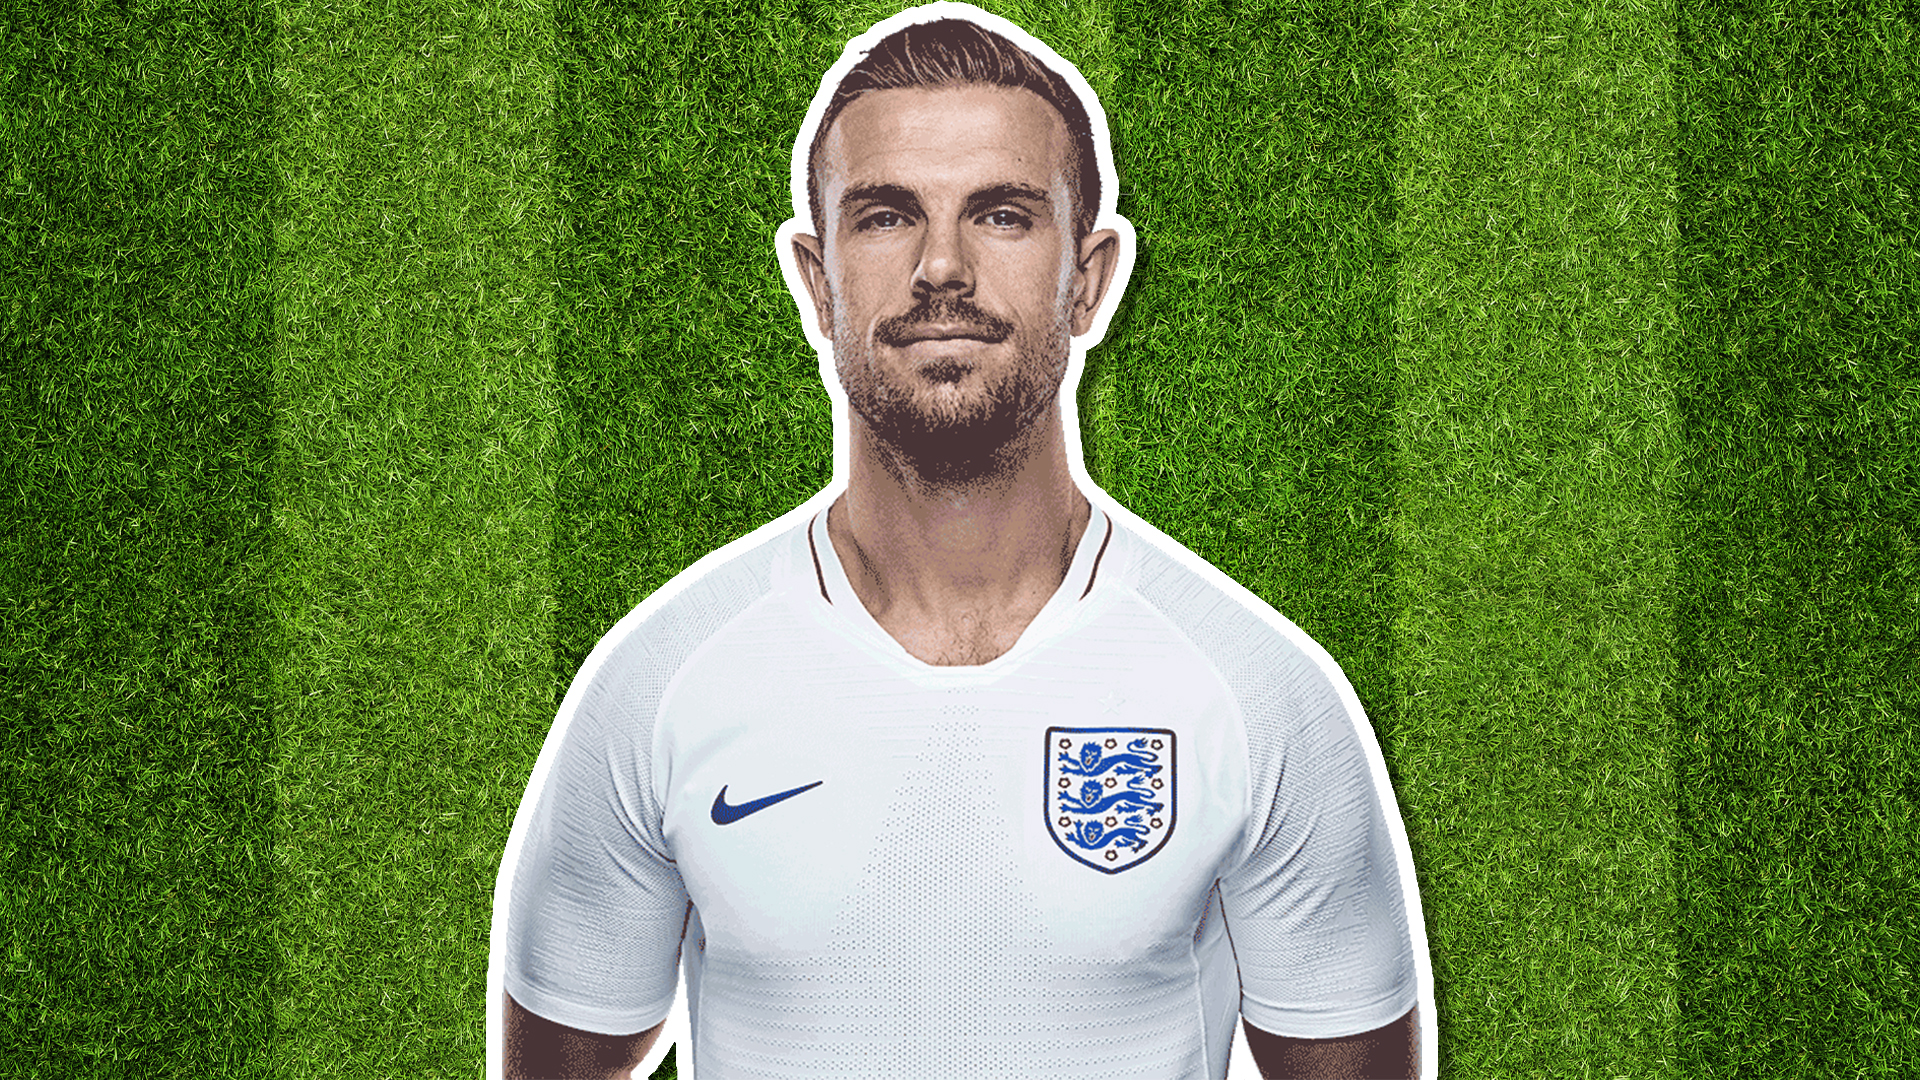 England player Jordan Henderson